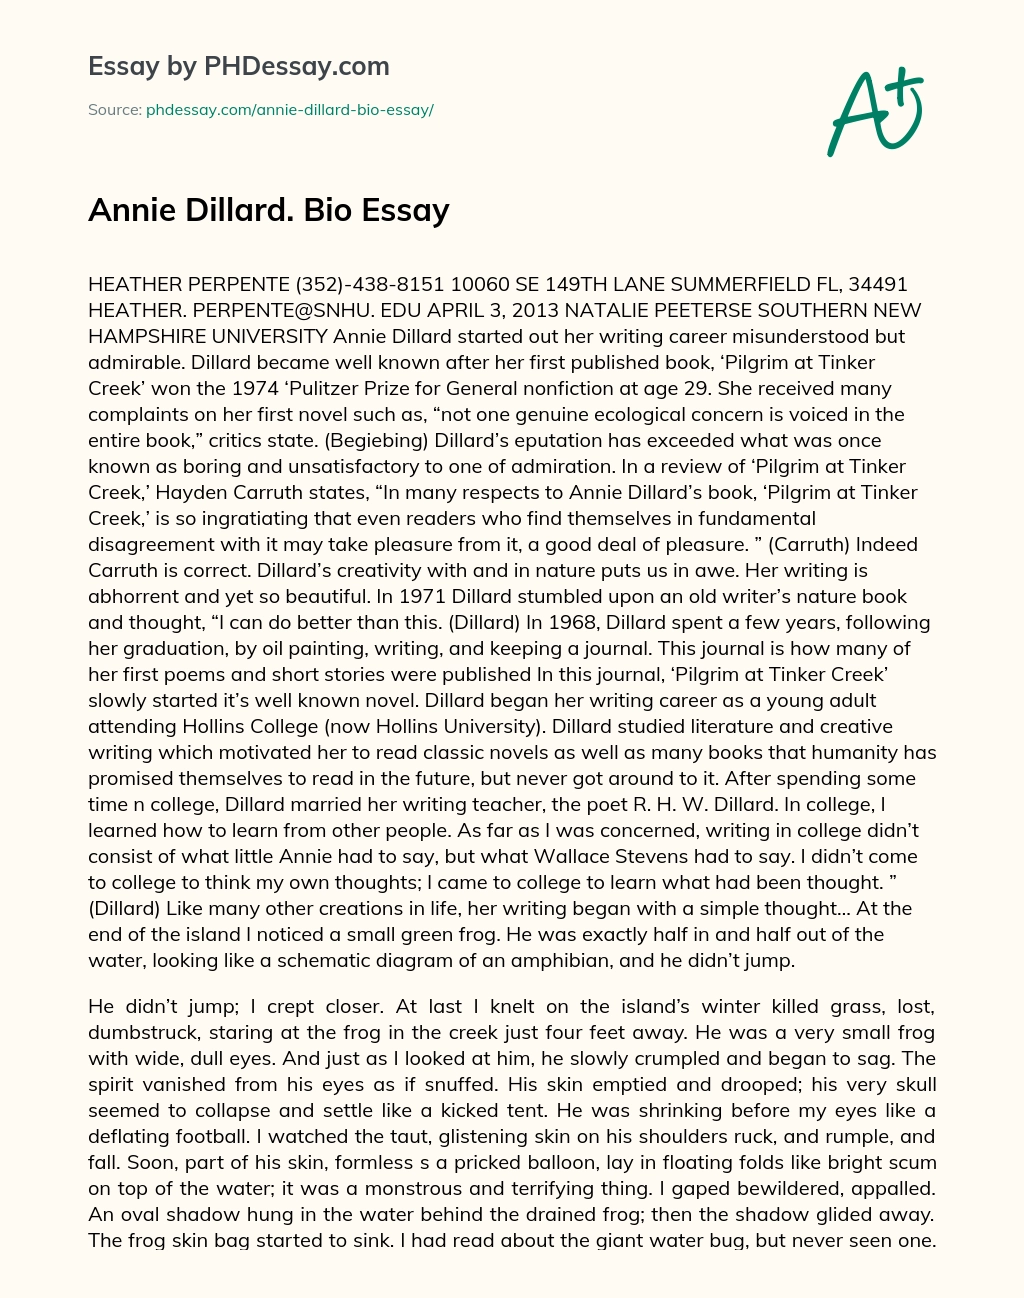 Annie Dillard-Bio Essay essay